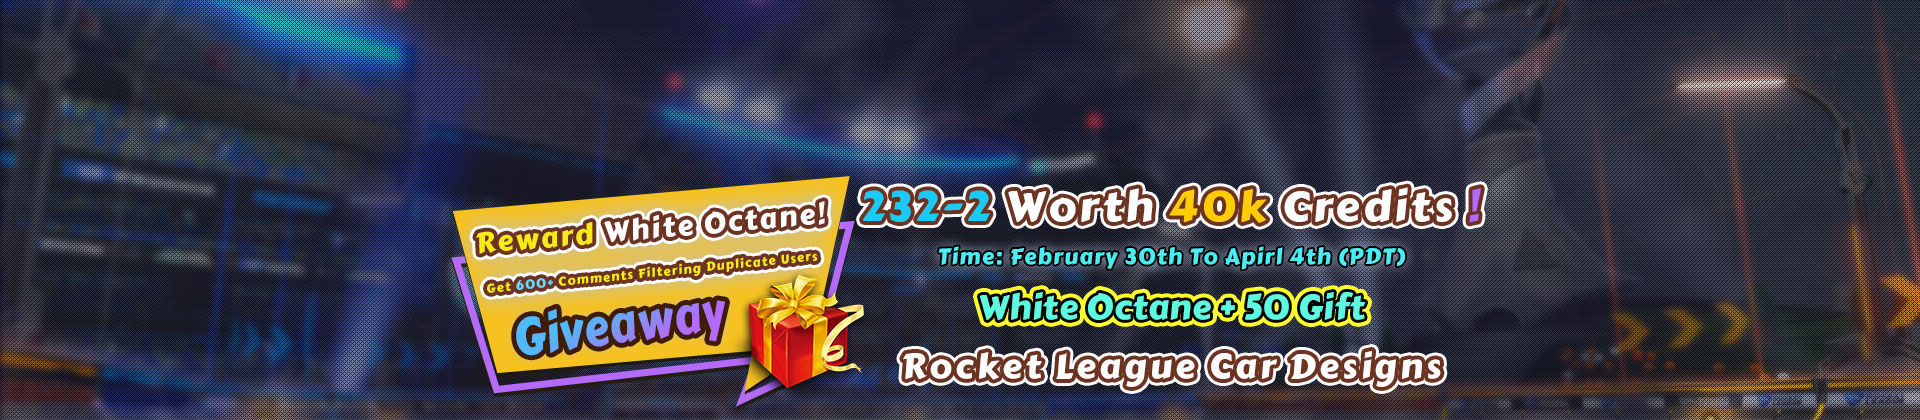 Rocket League Items Giveaway 232-2